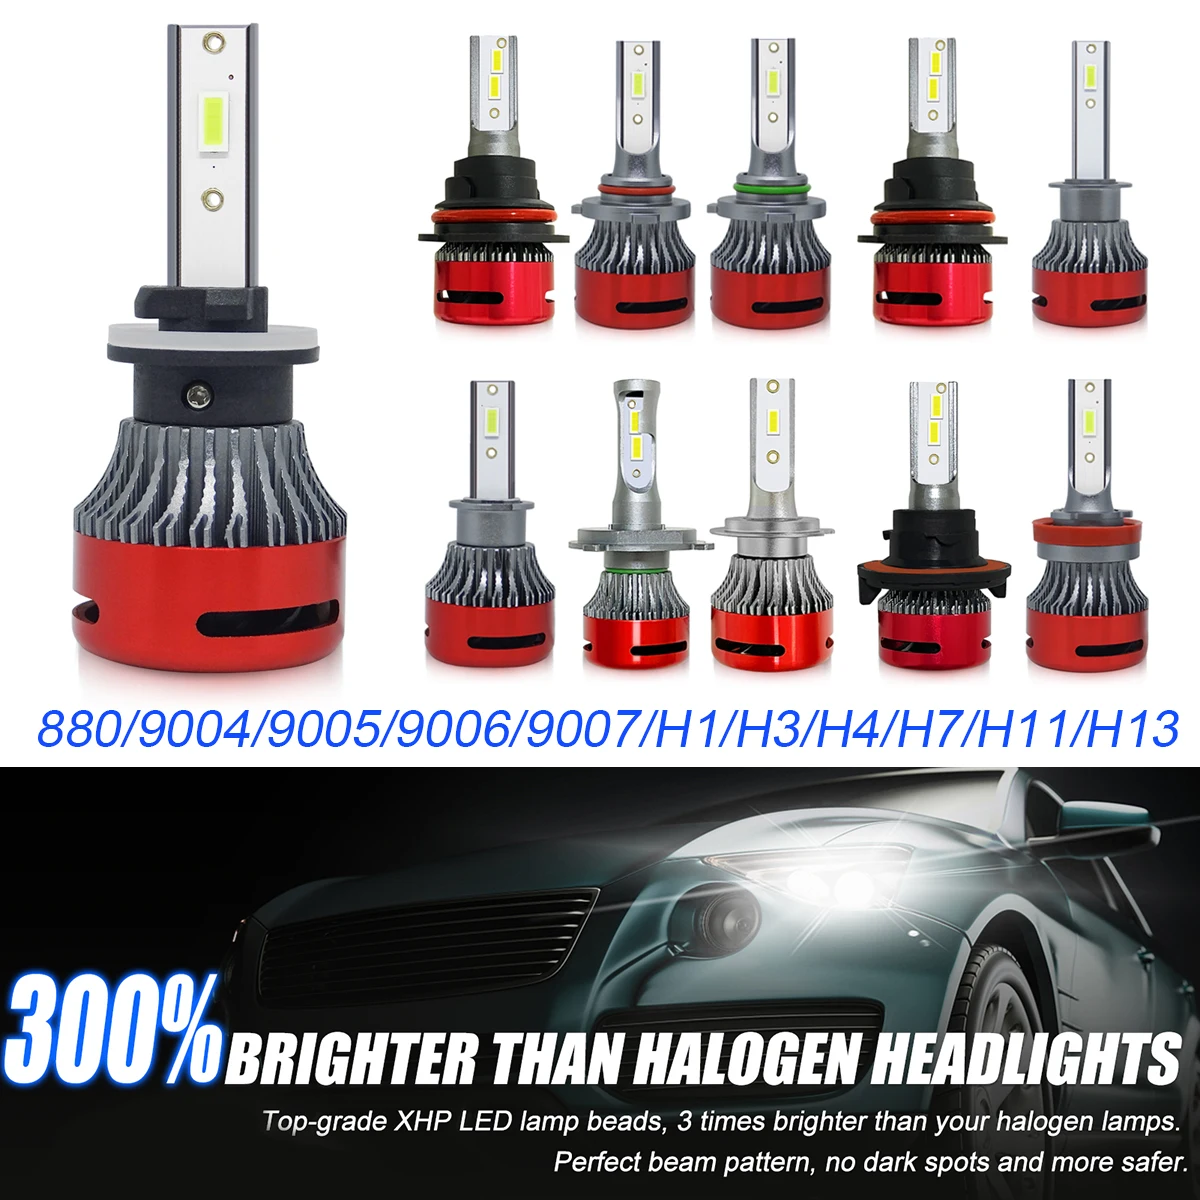 

2pcs H1 H3 H4 H7 H8 H9 H11 9005 9006 880 881 LED Headlight Bulbs Hi/Lo Beam LED Headlights Conversion Kit